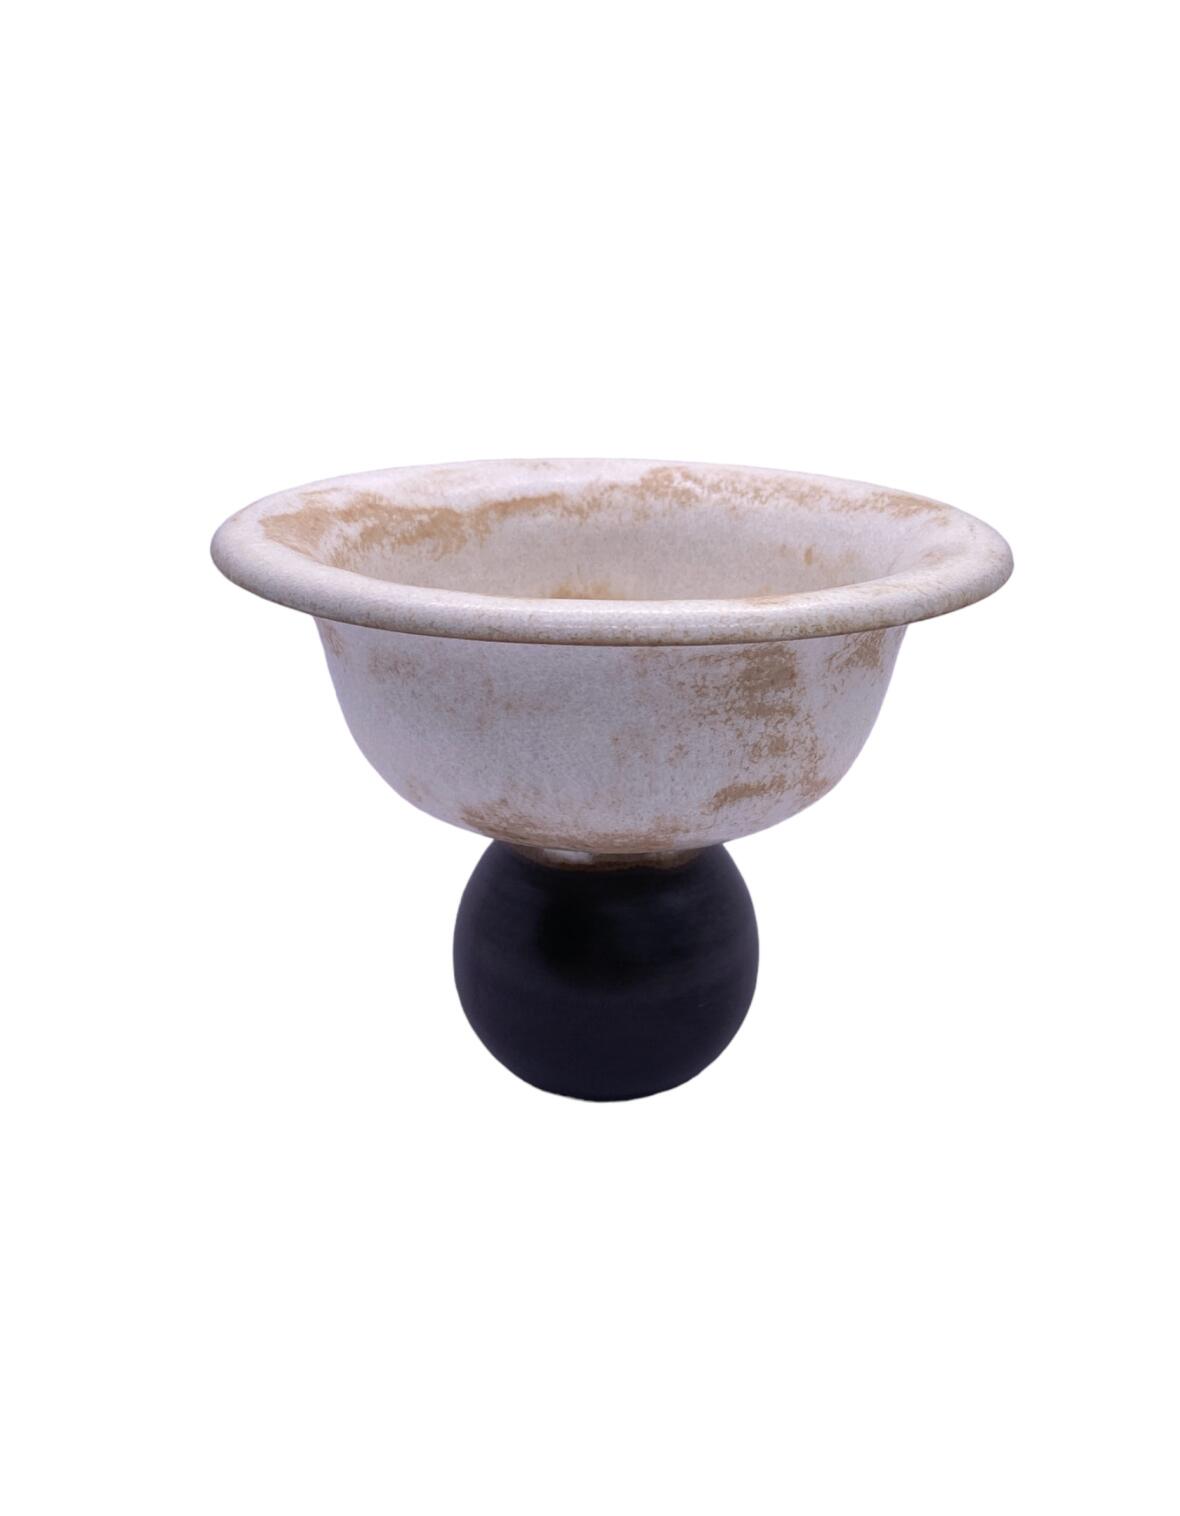 Bowl Dot Incense Ceramic Holder